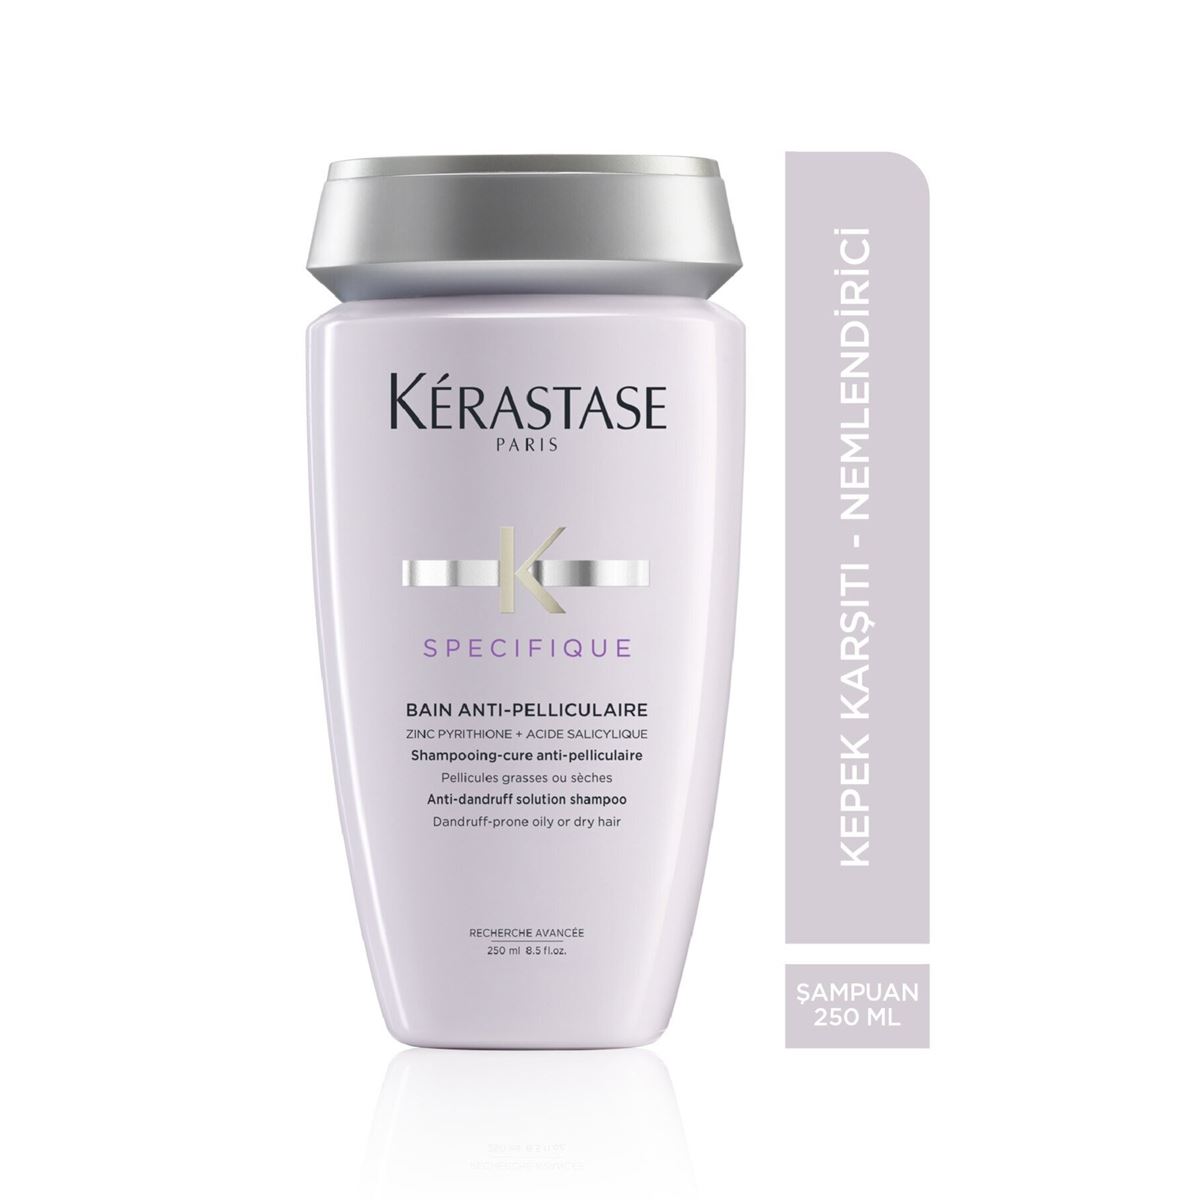 Kerastase Specifique Bain Anti-Pelliculaire Şampuan 250ml